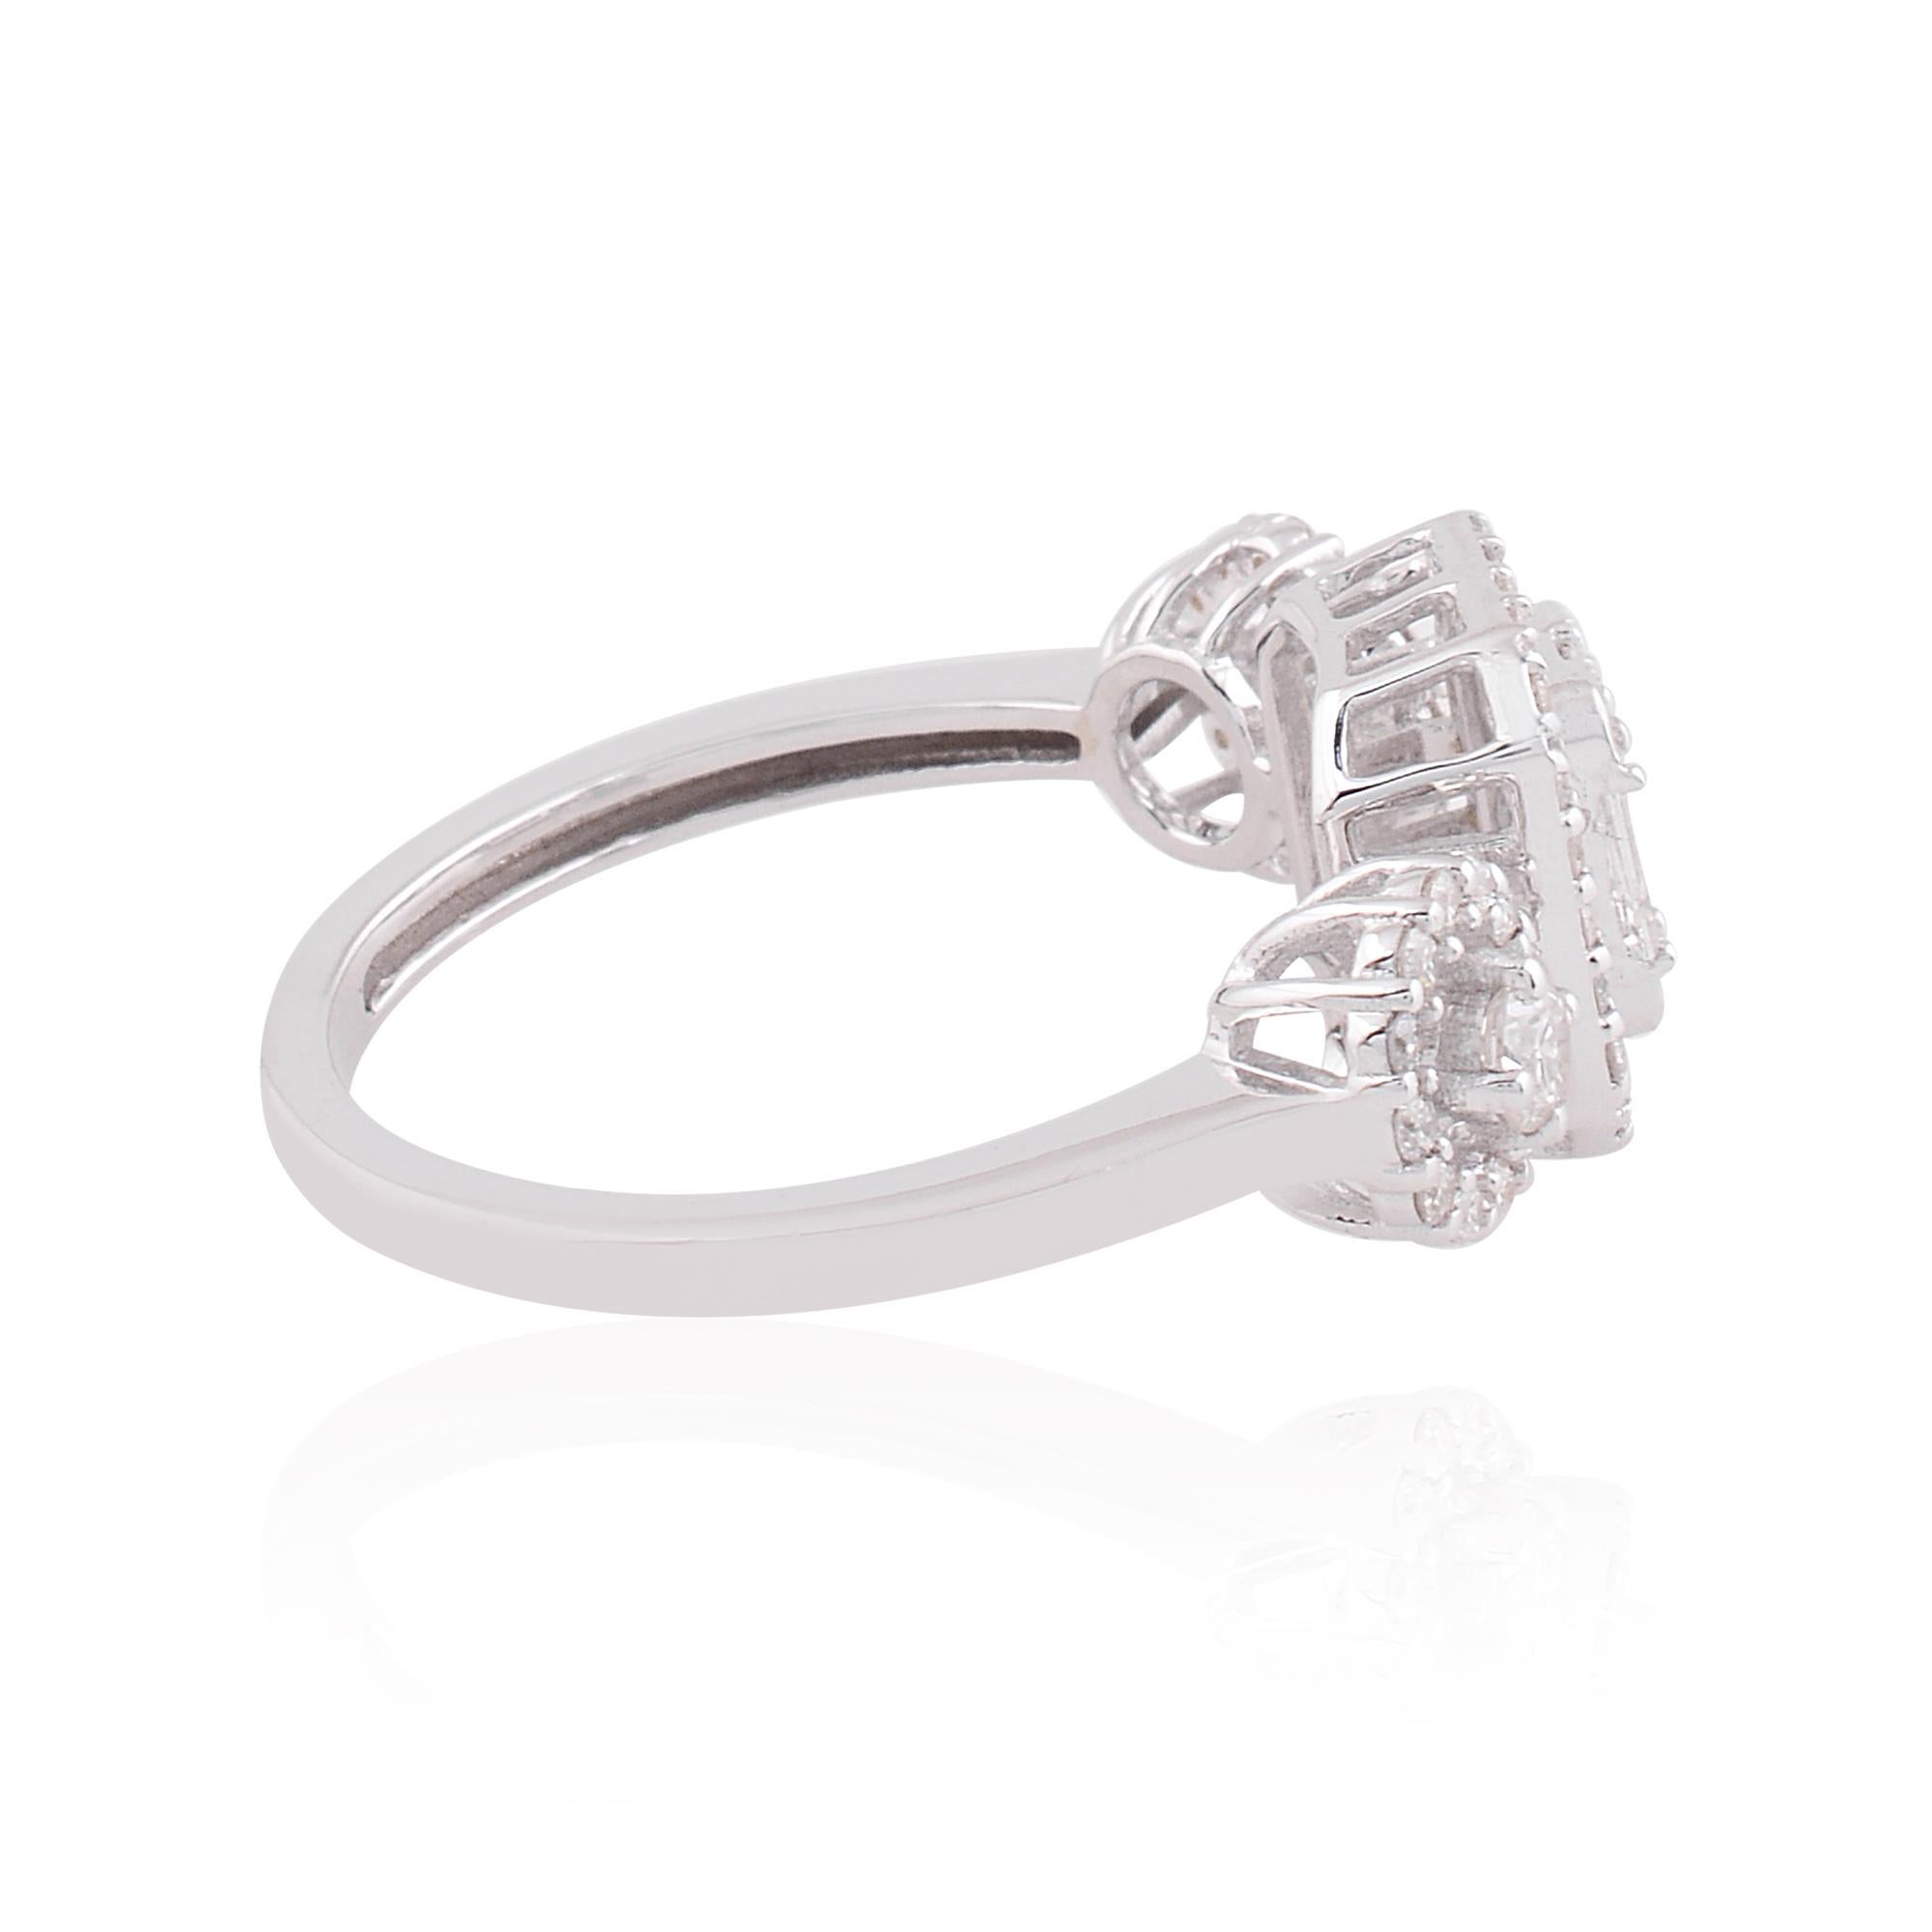 For Sale:  0.76 Carat SI Clarity HI Color Baguette Diamond Ring 18 Karat White Gold Jewelry 4